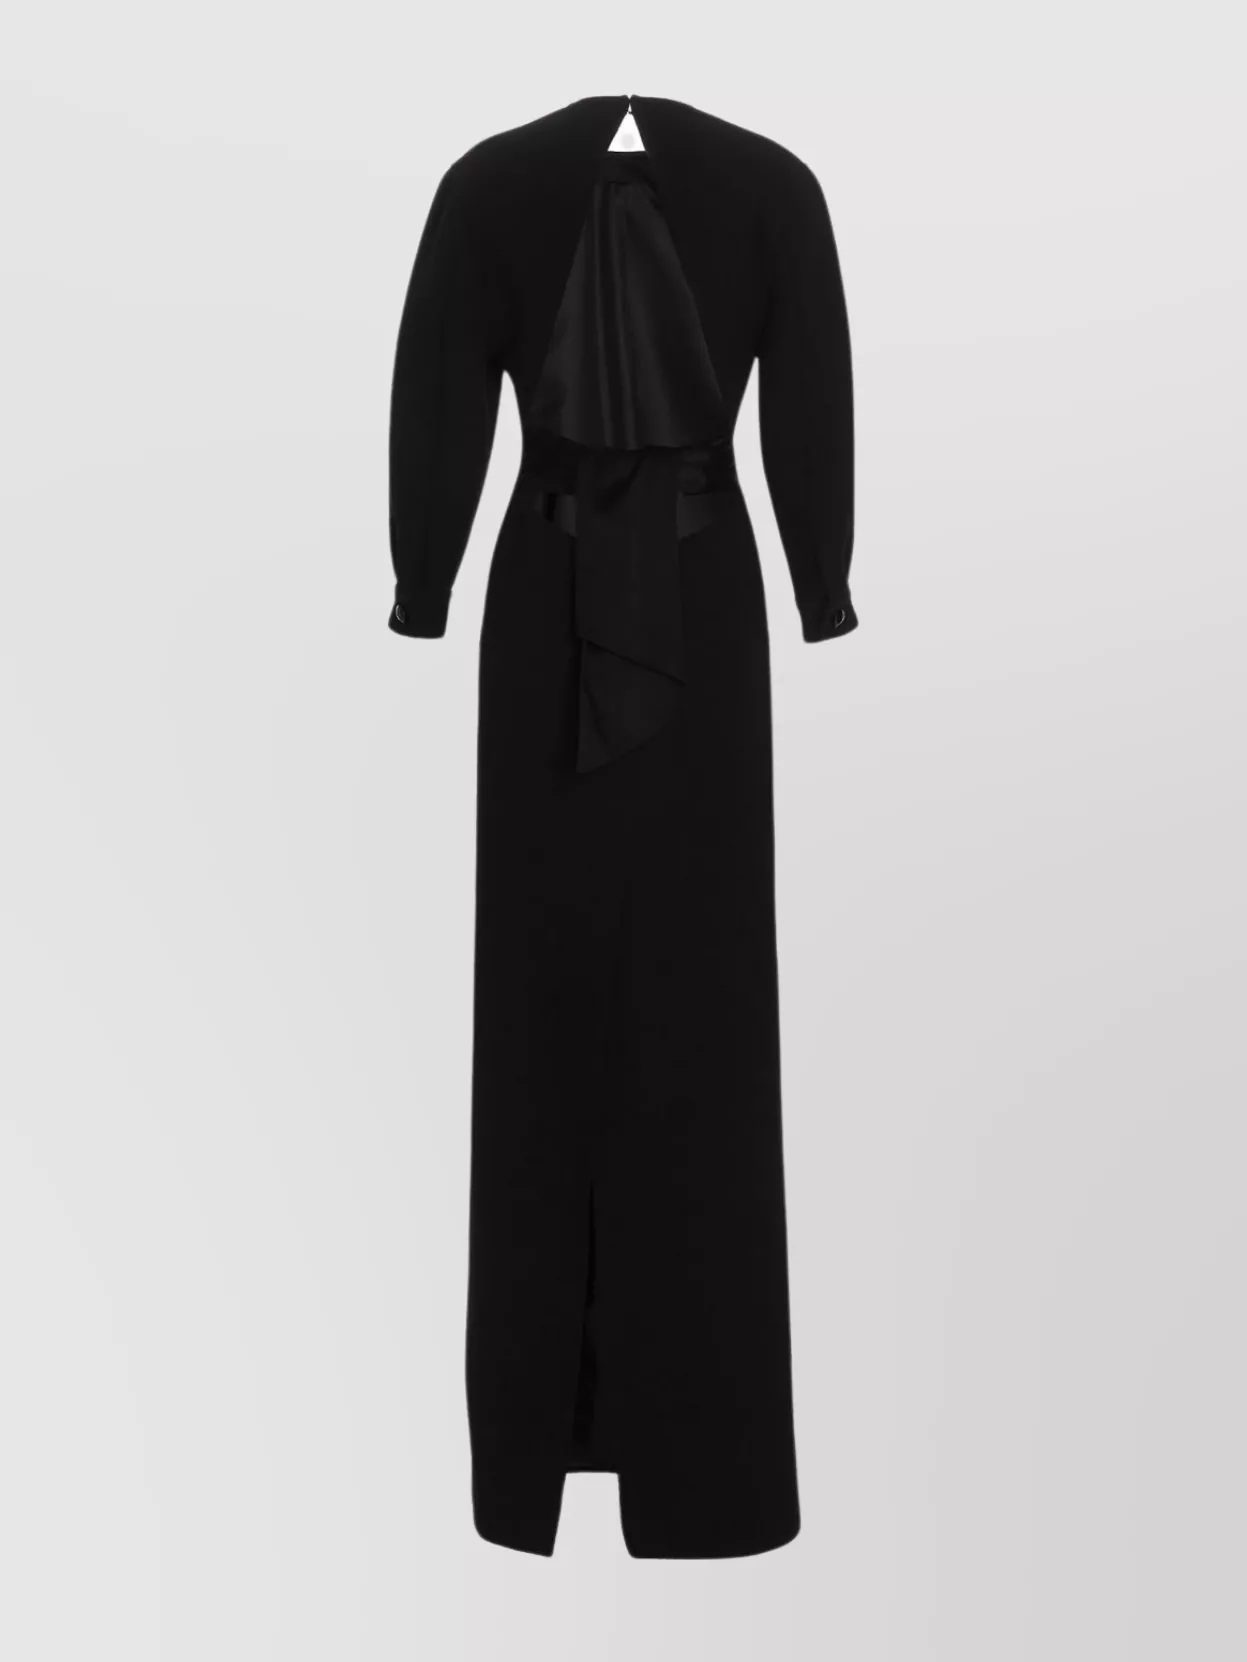 Saint Laurent "draped Detail Structured Elegance" Dress In Black